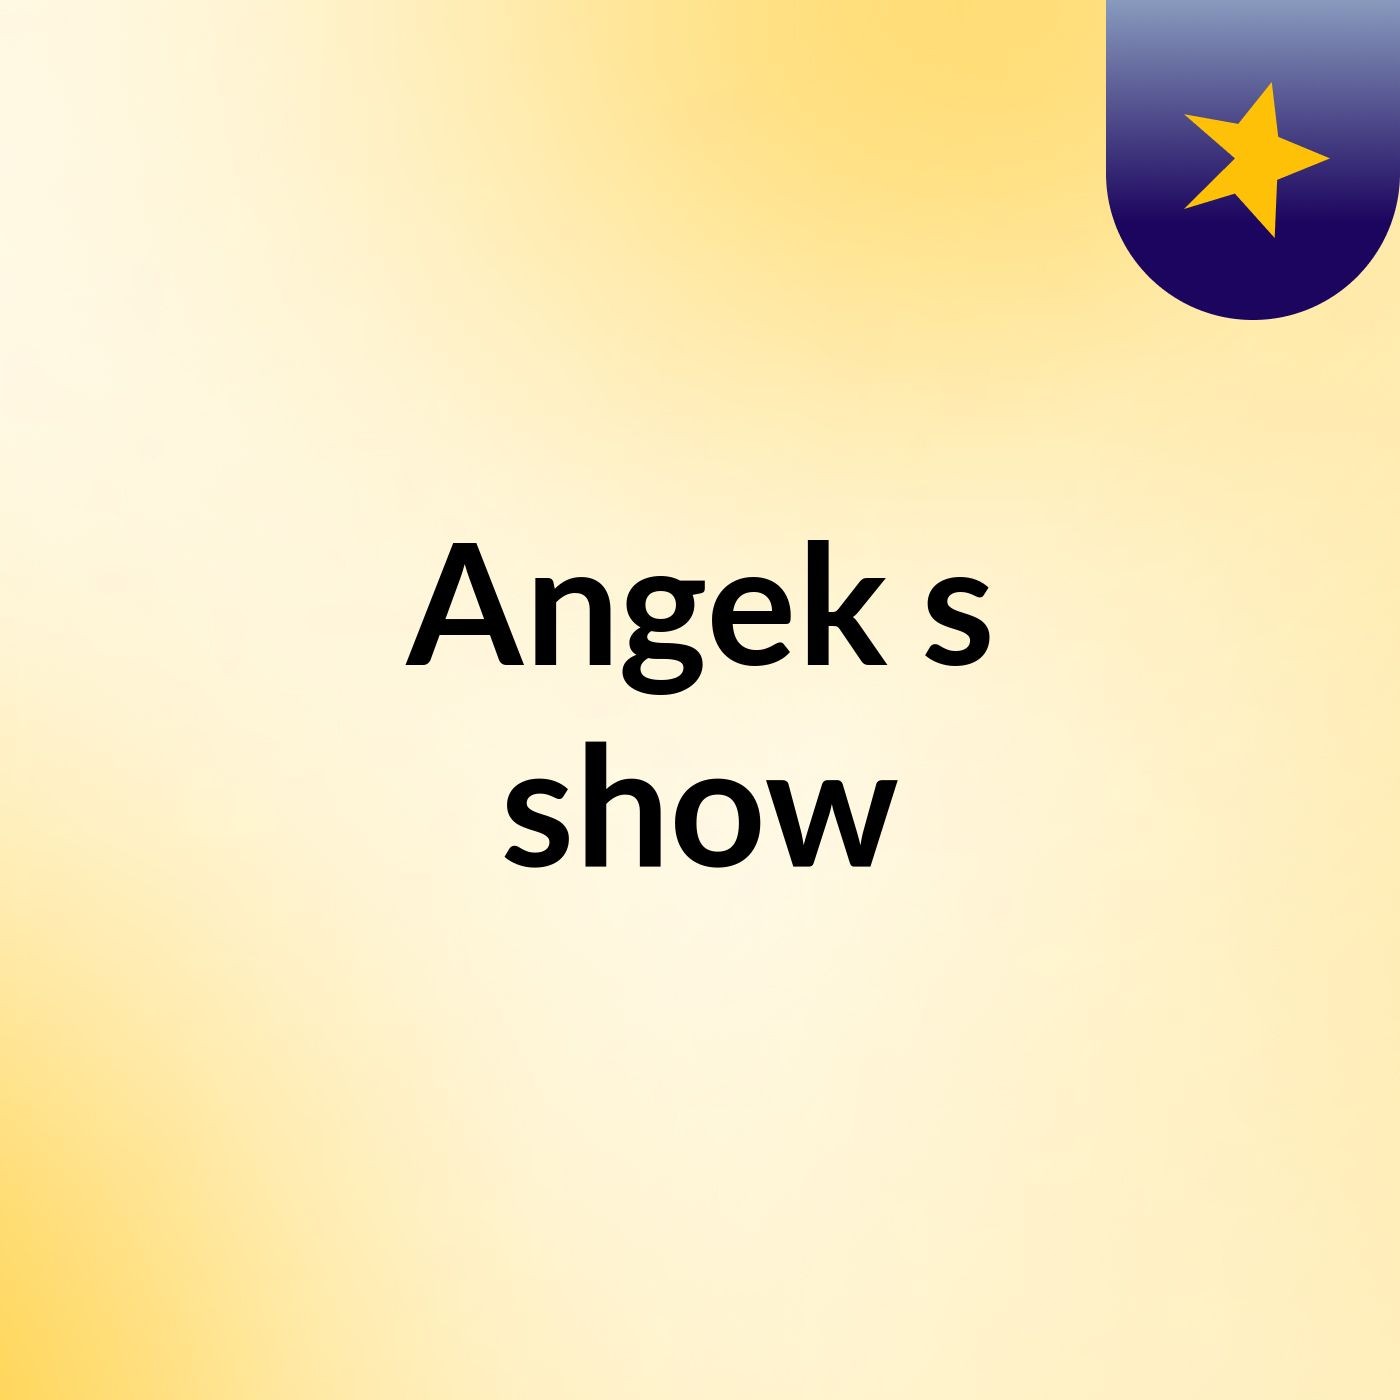 Angek's show